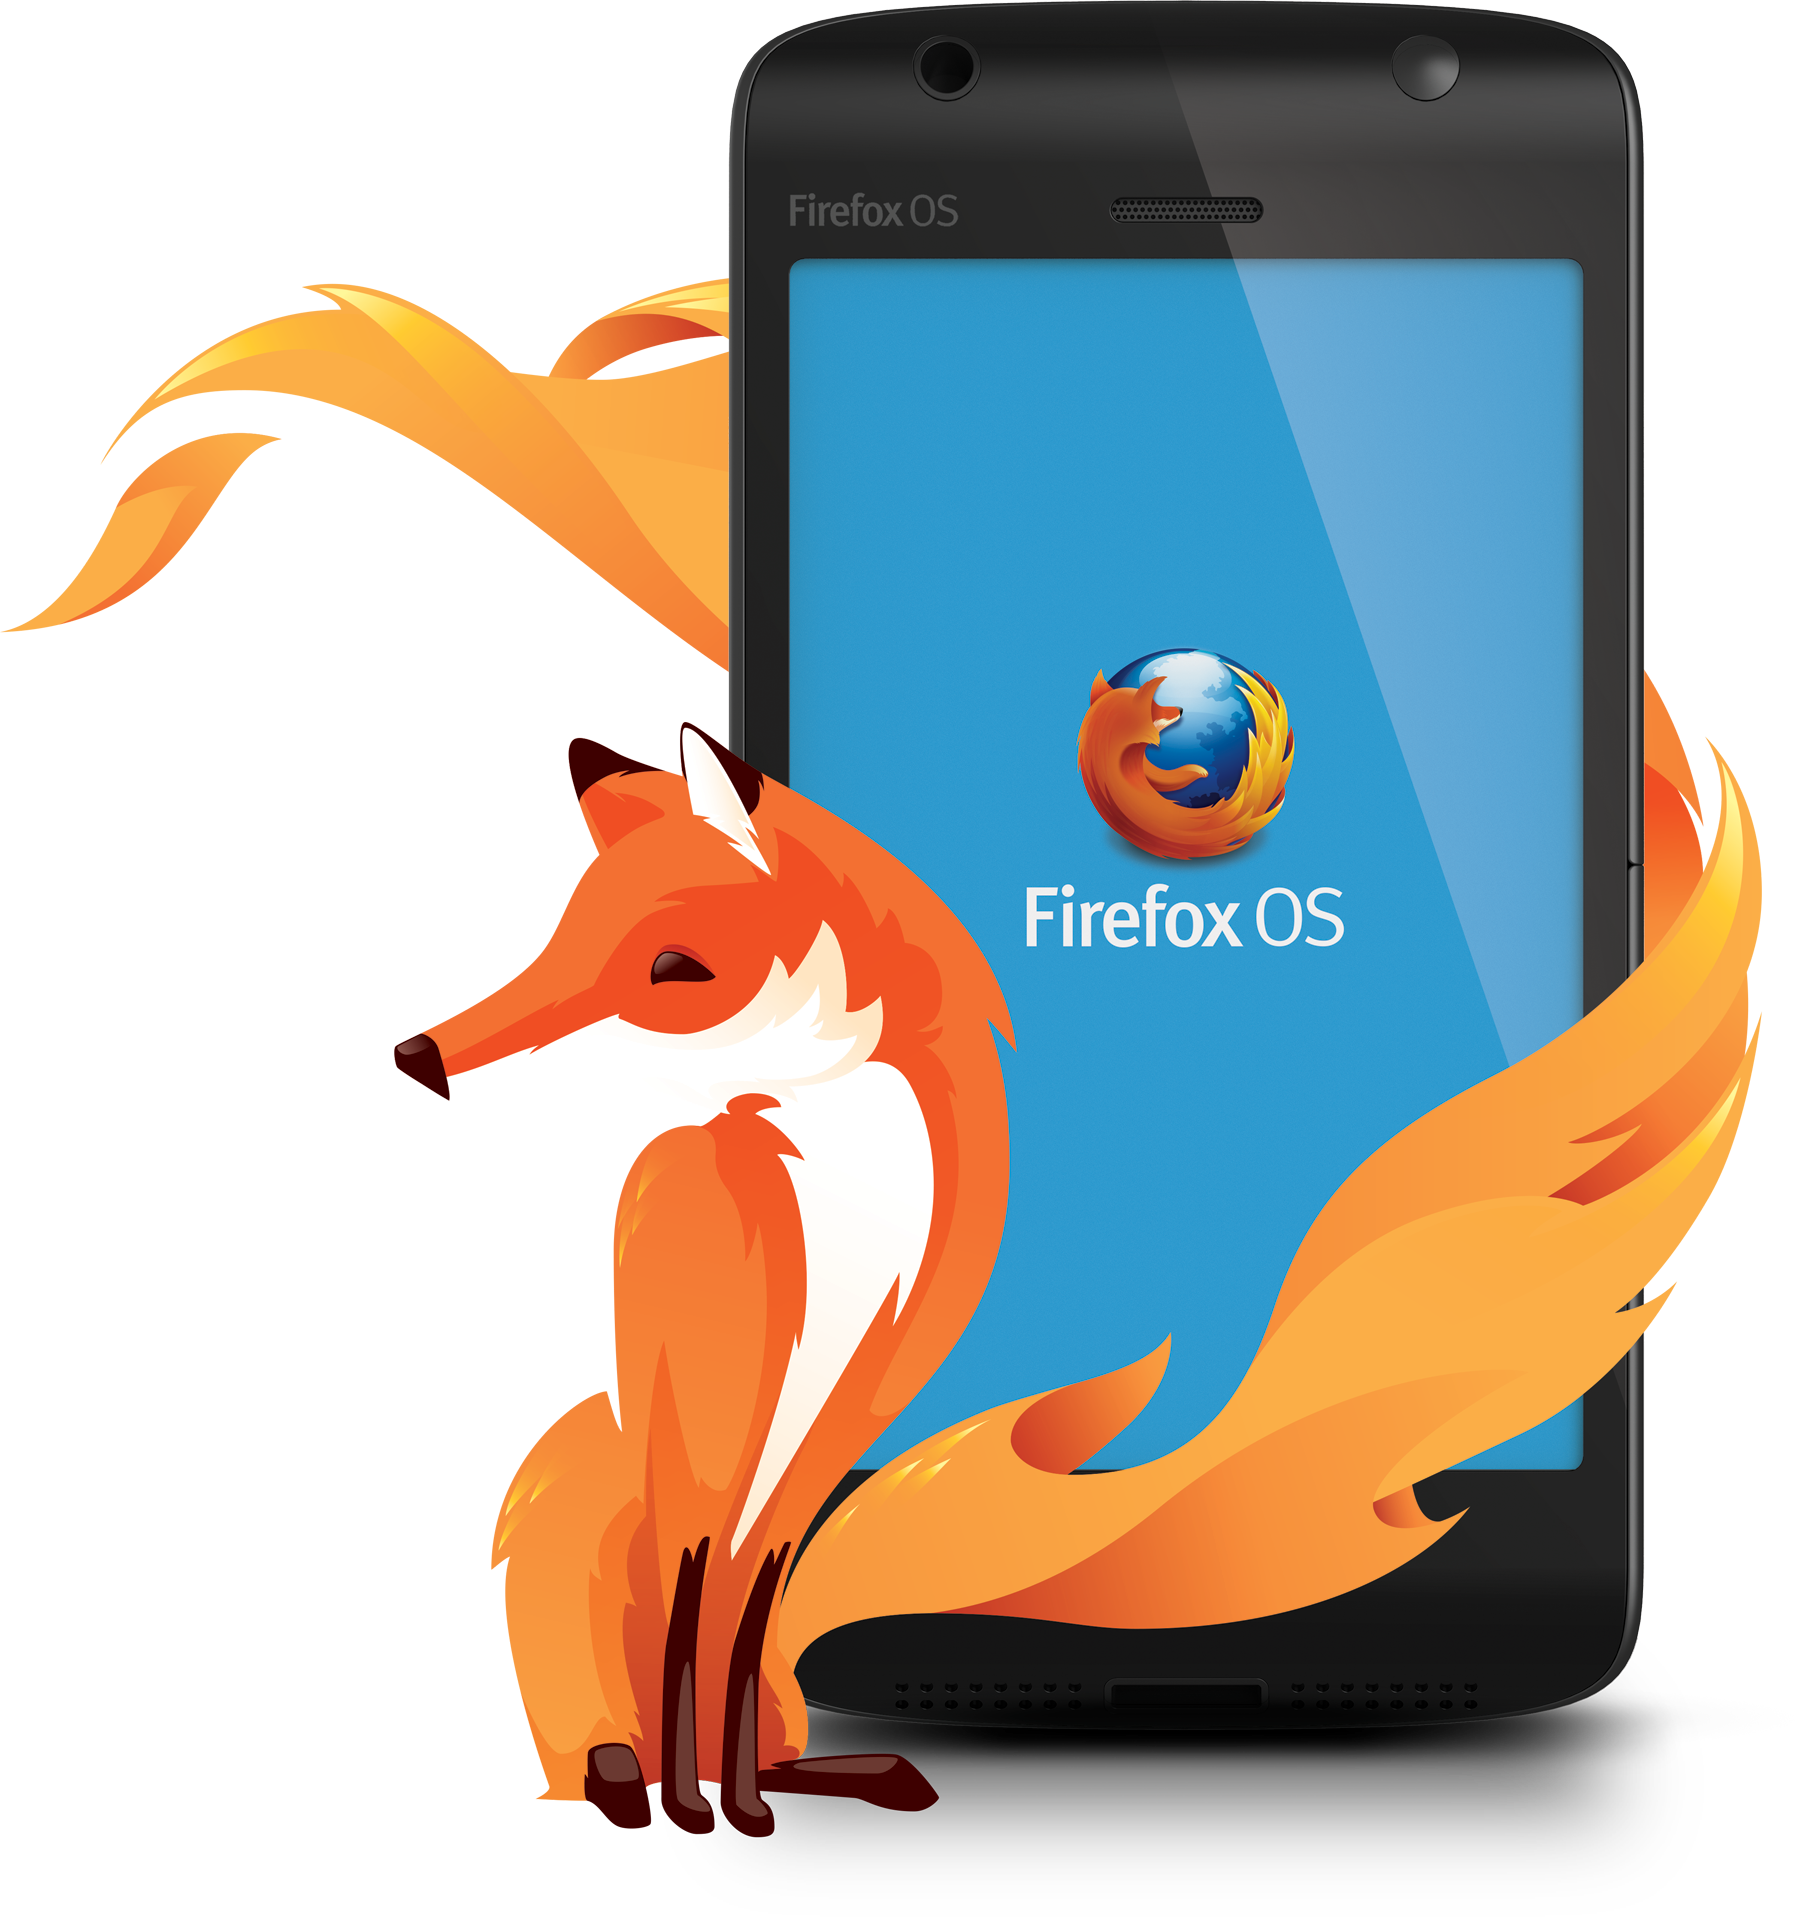 Firefox OS phones